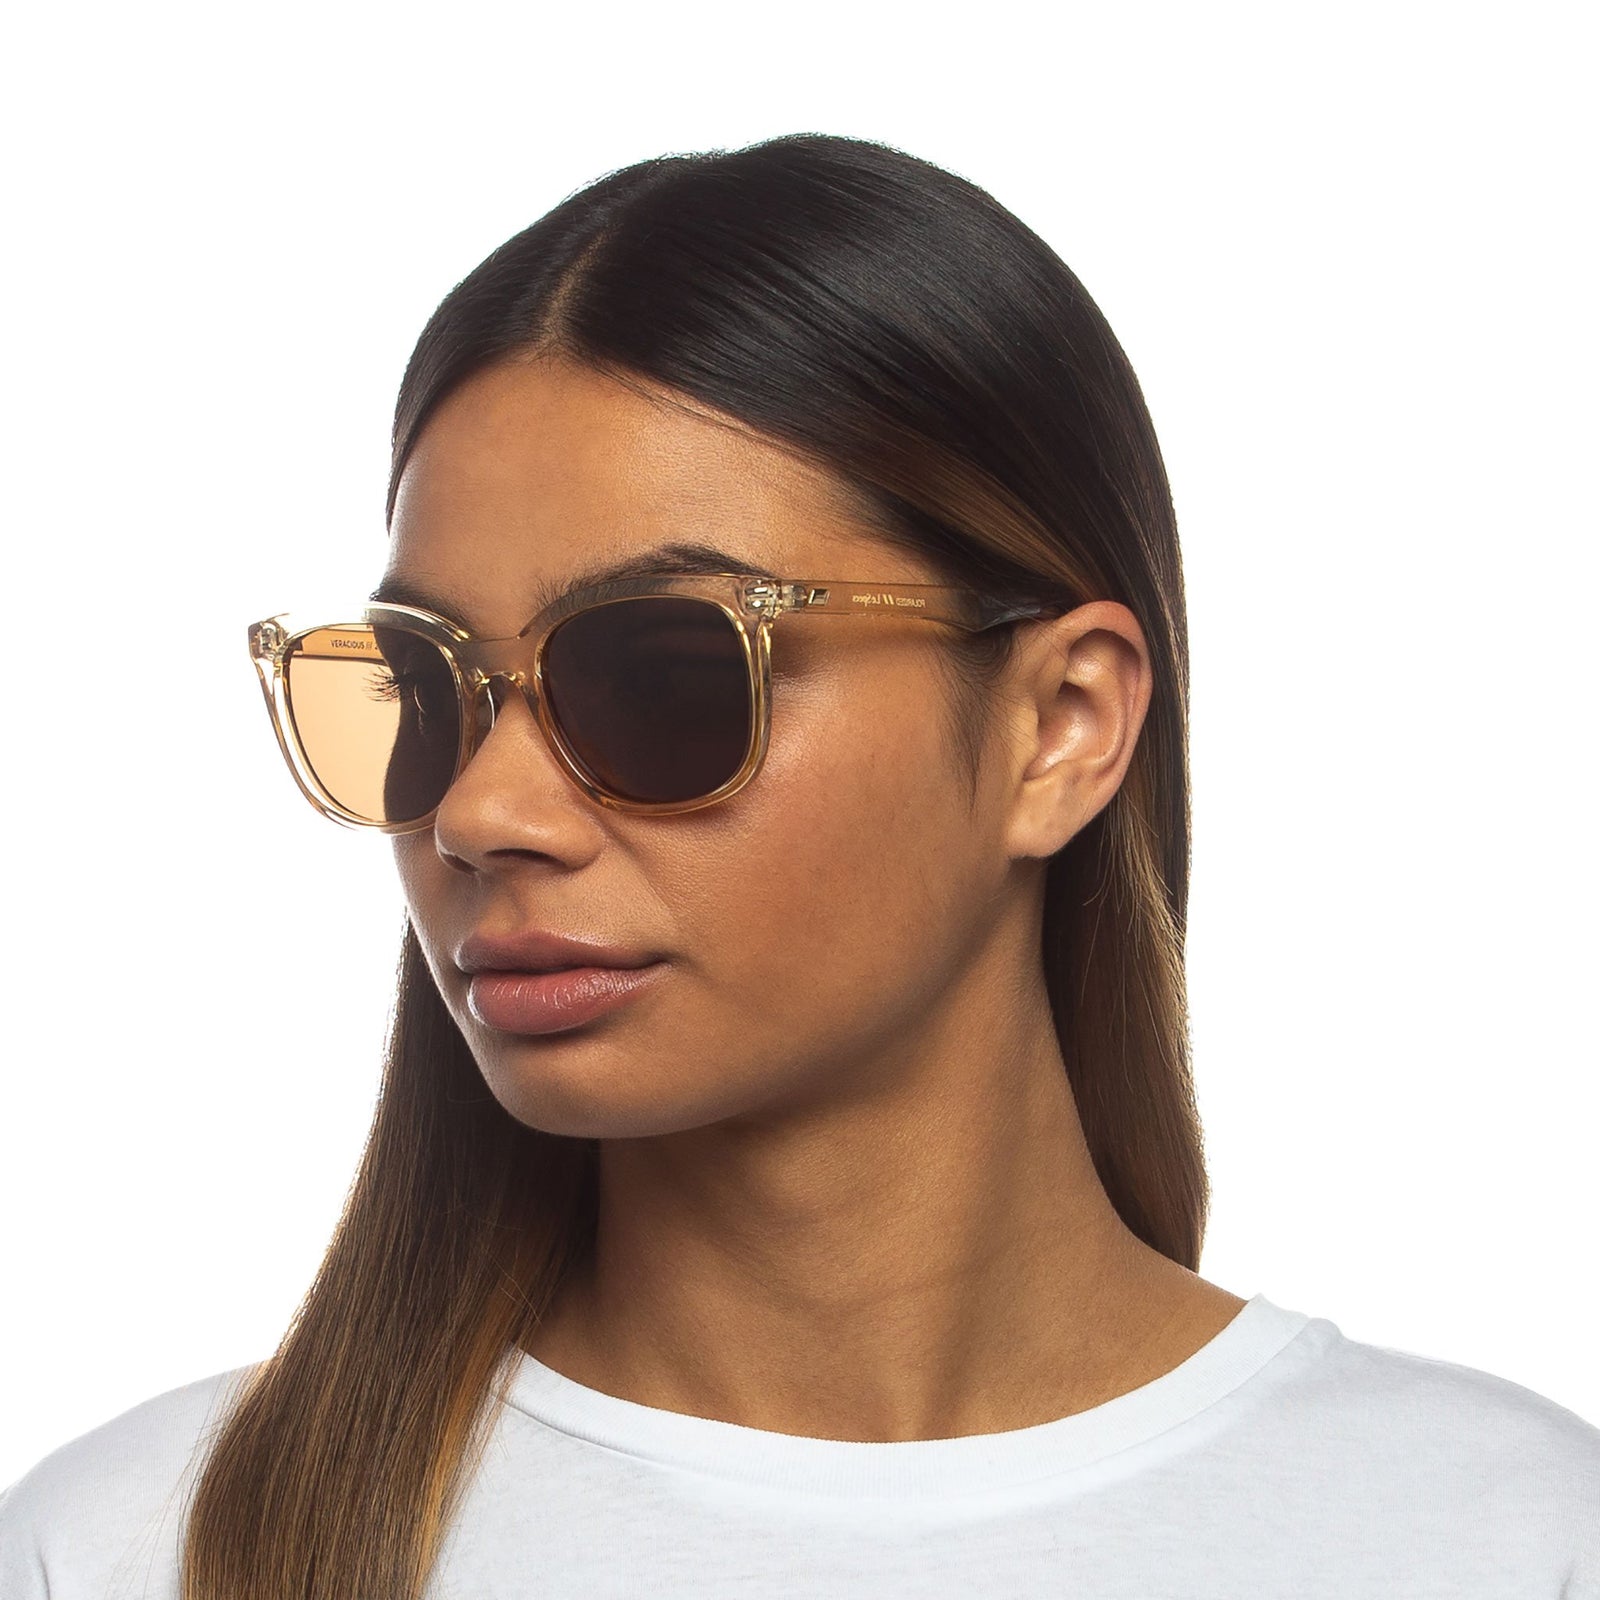 Best women's sunglasses 2022: High street to designer shades